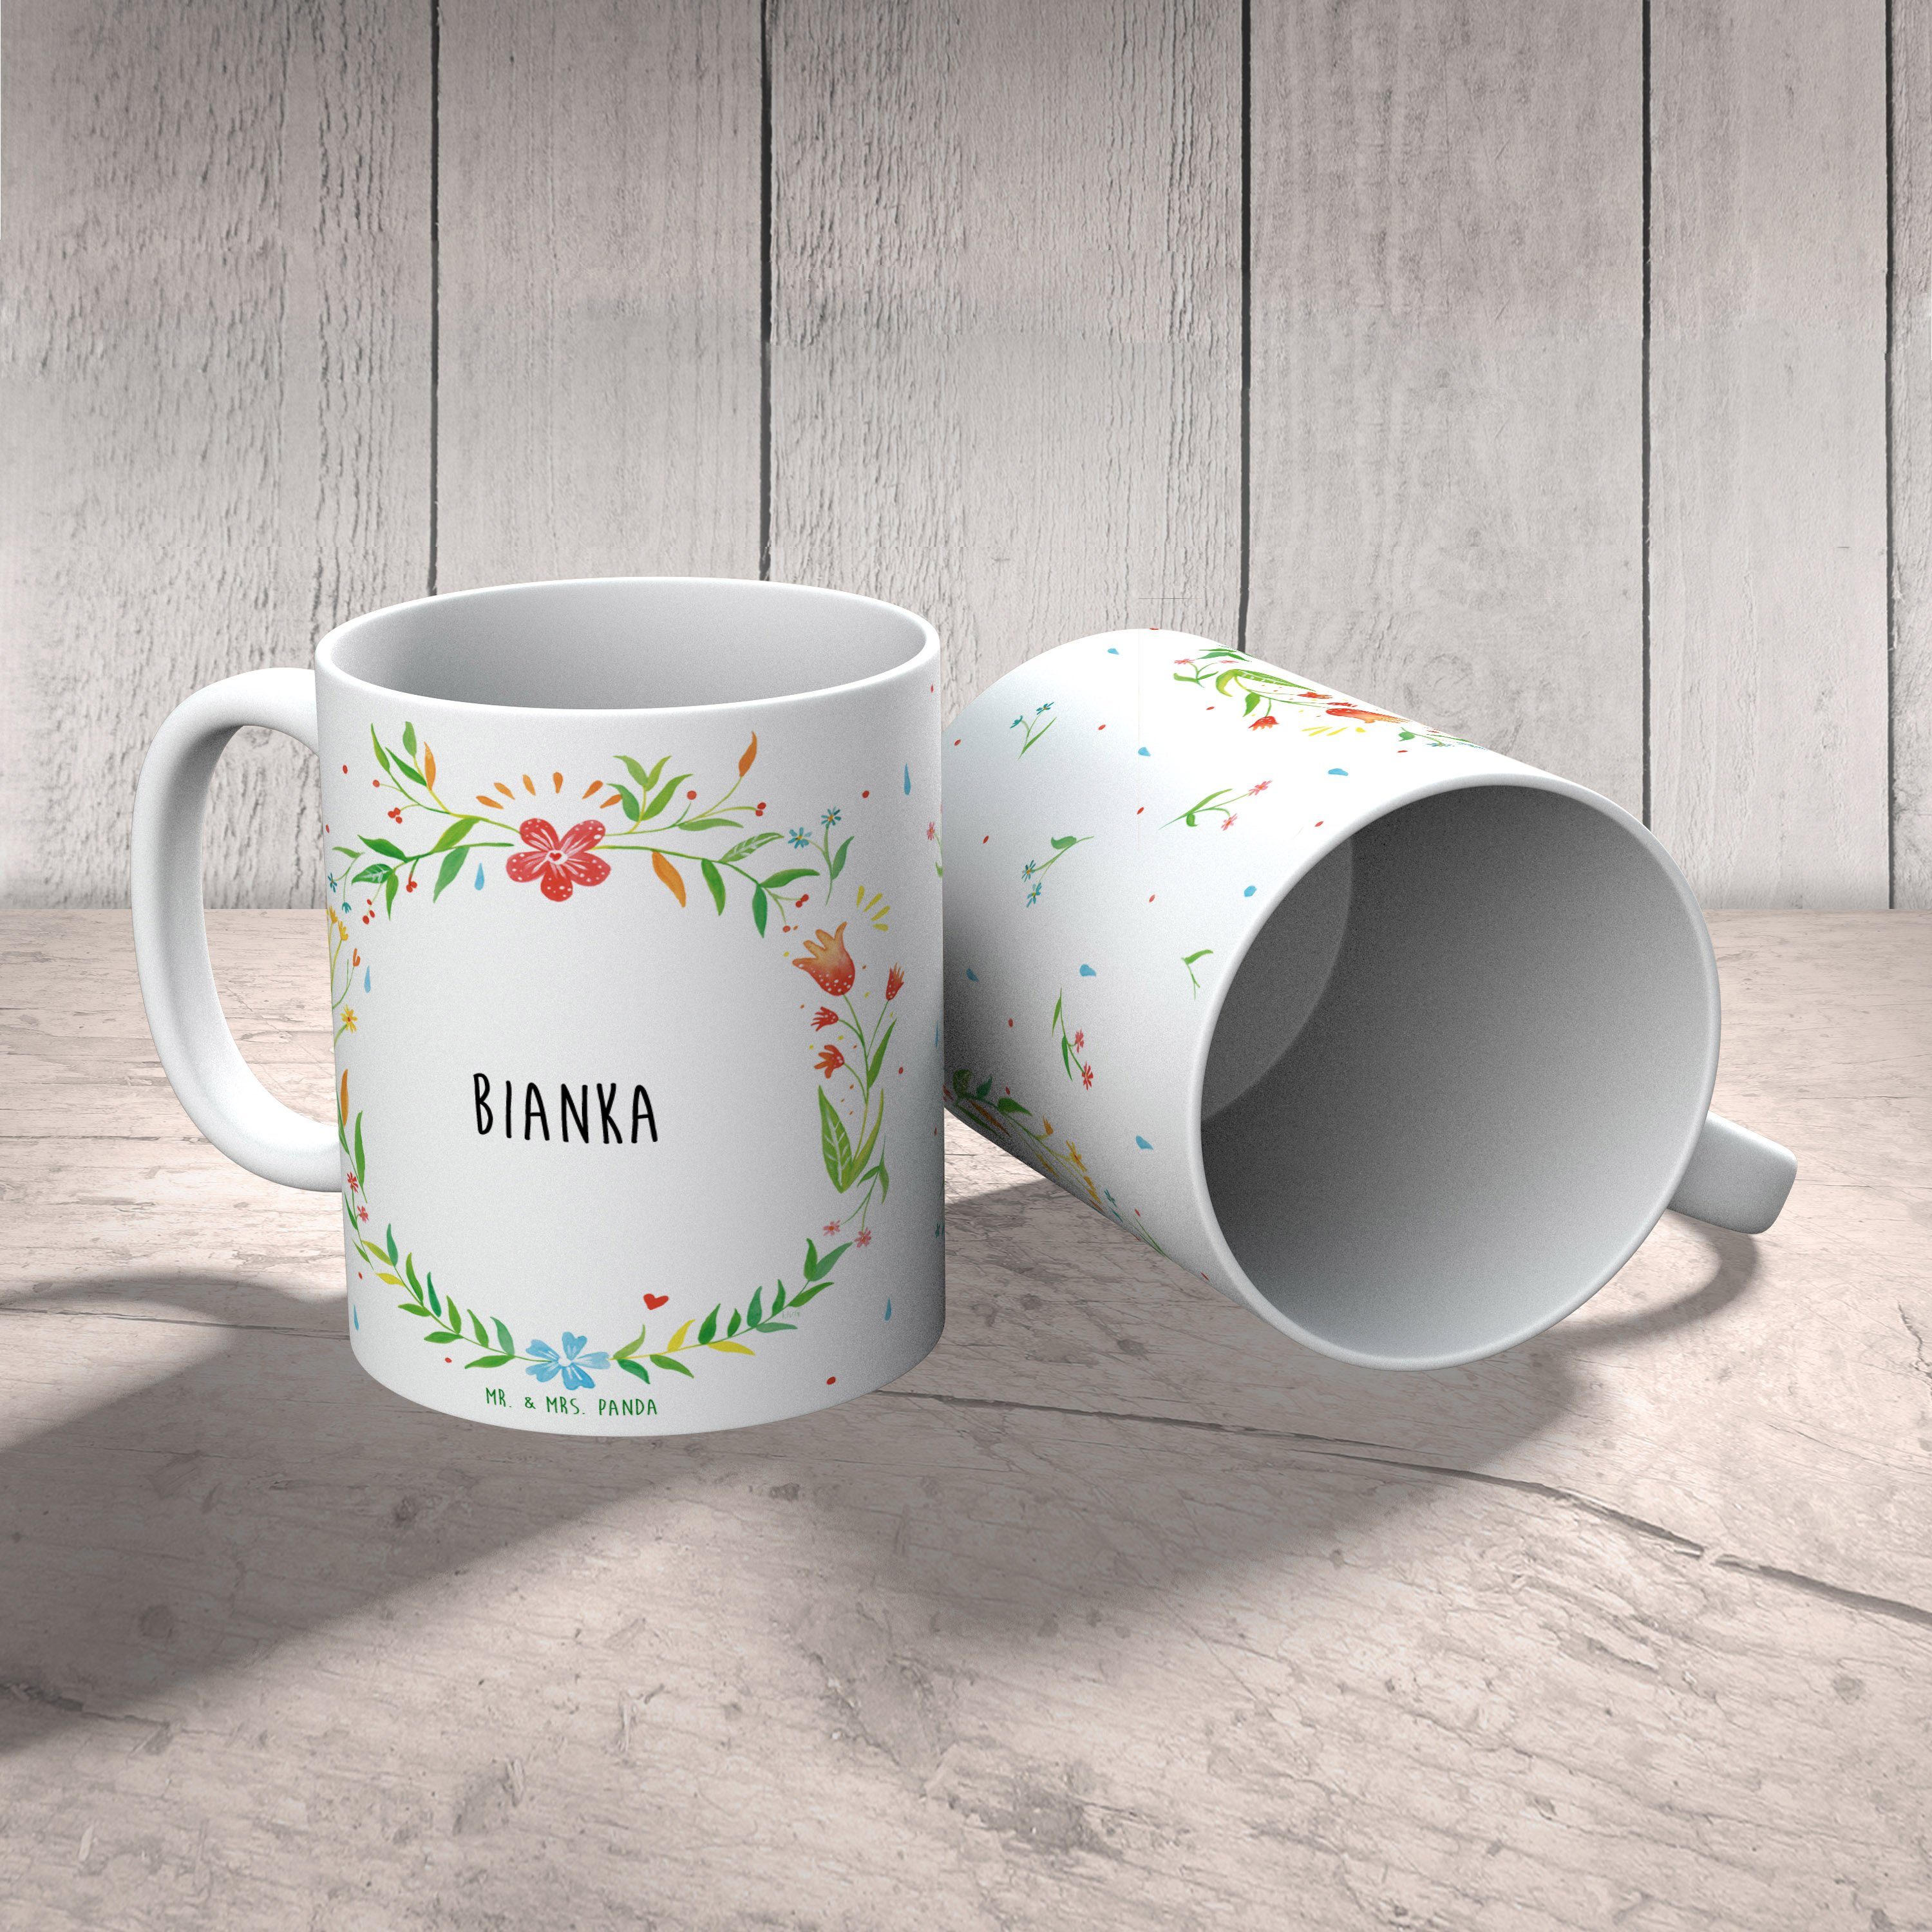 Tasse, Teebecher, - Keramik Bianka Tasse Geschenk Teetasse, Mr. Panda & Mrs. Geschenk, Kaffeebecher,